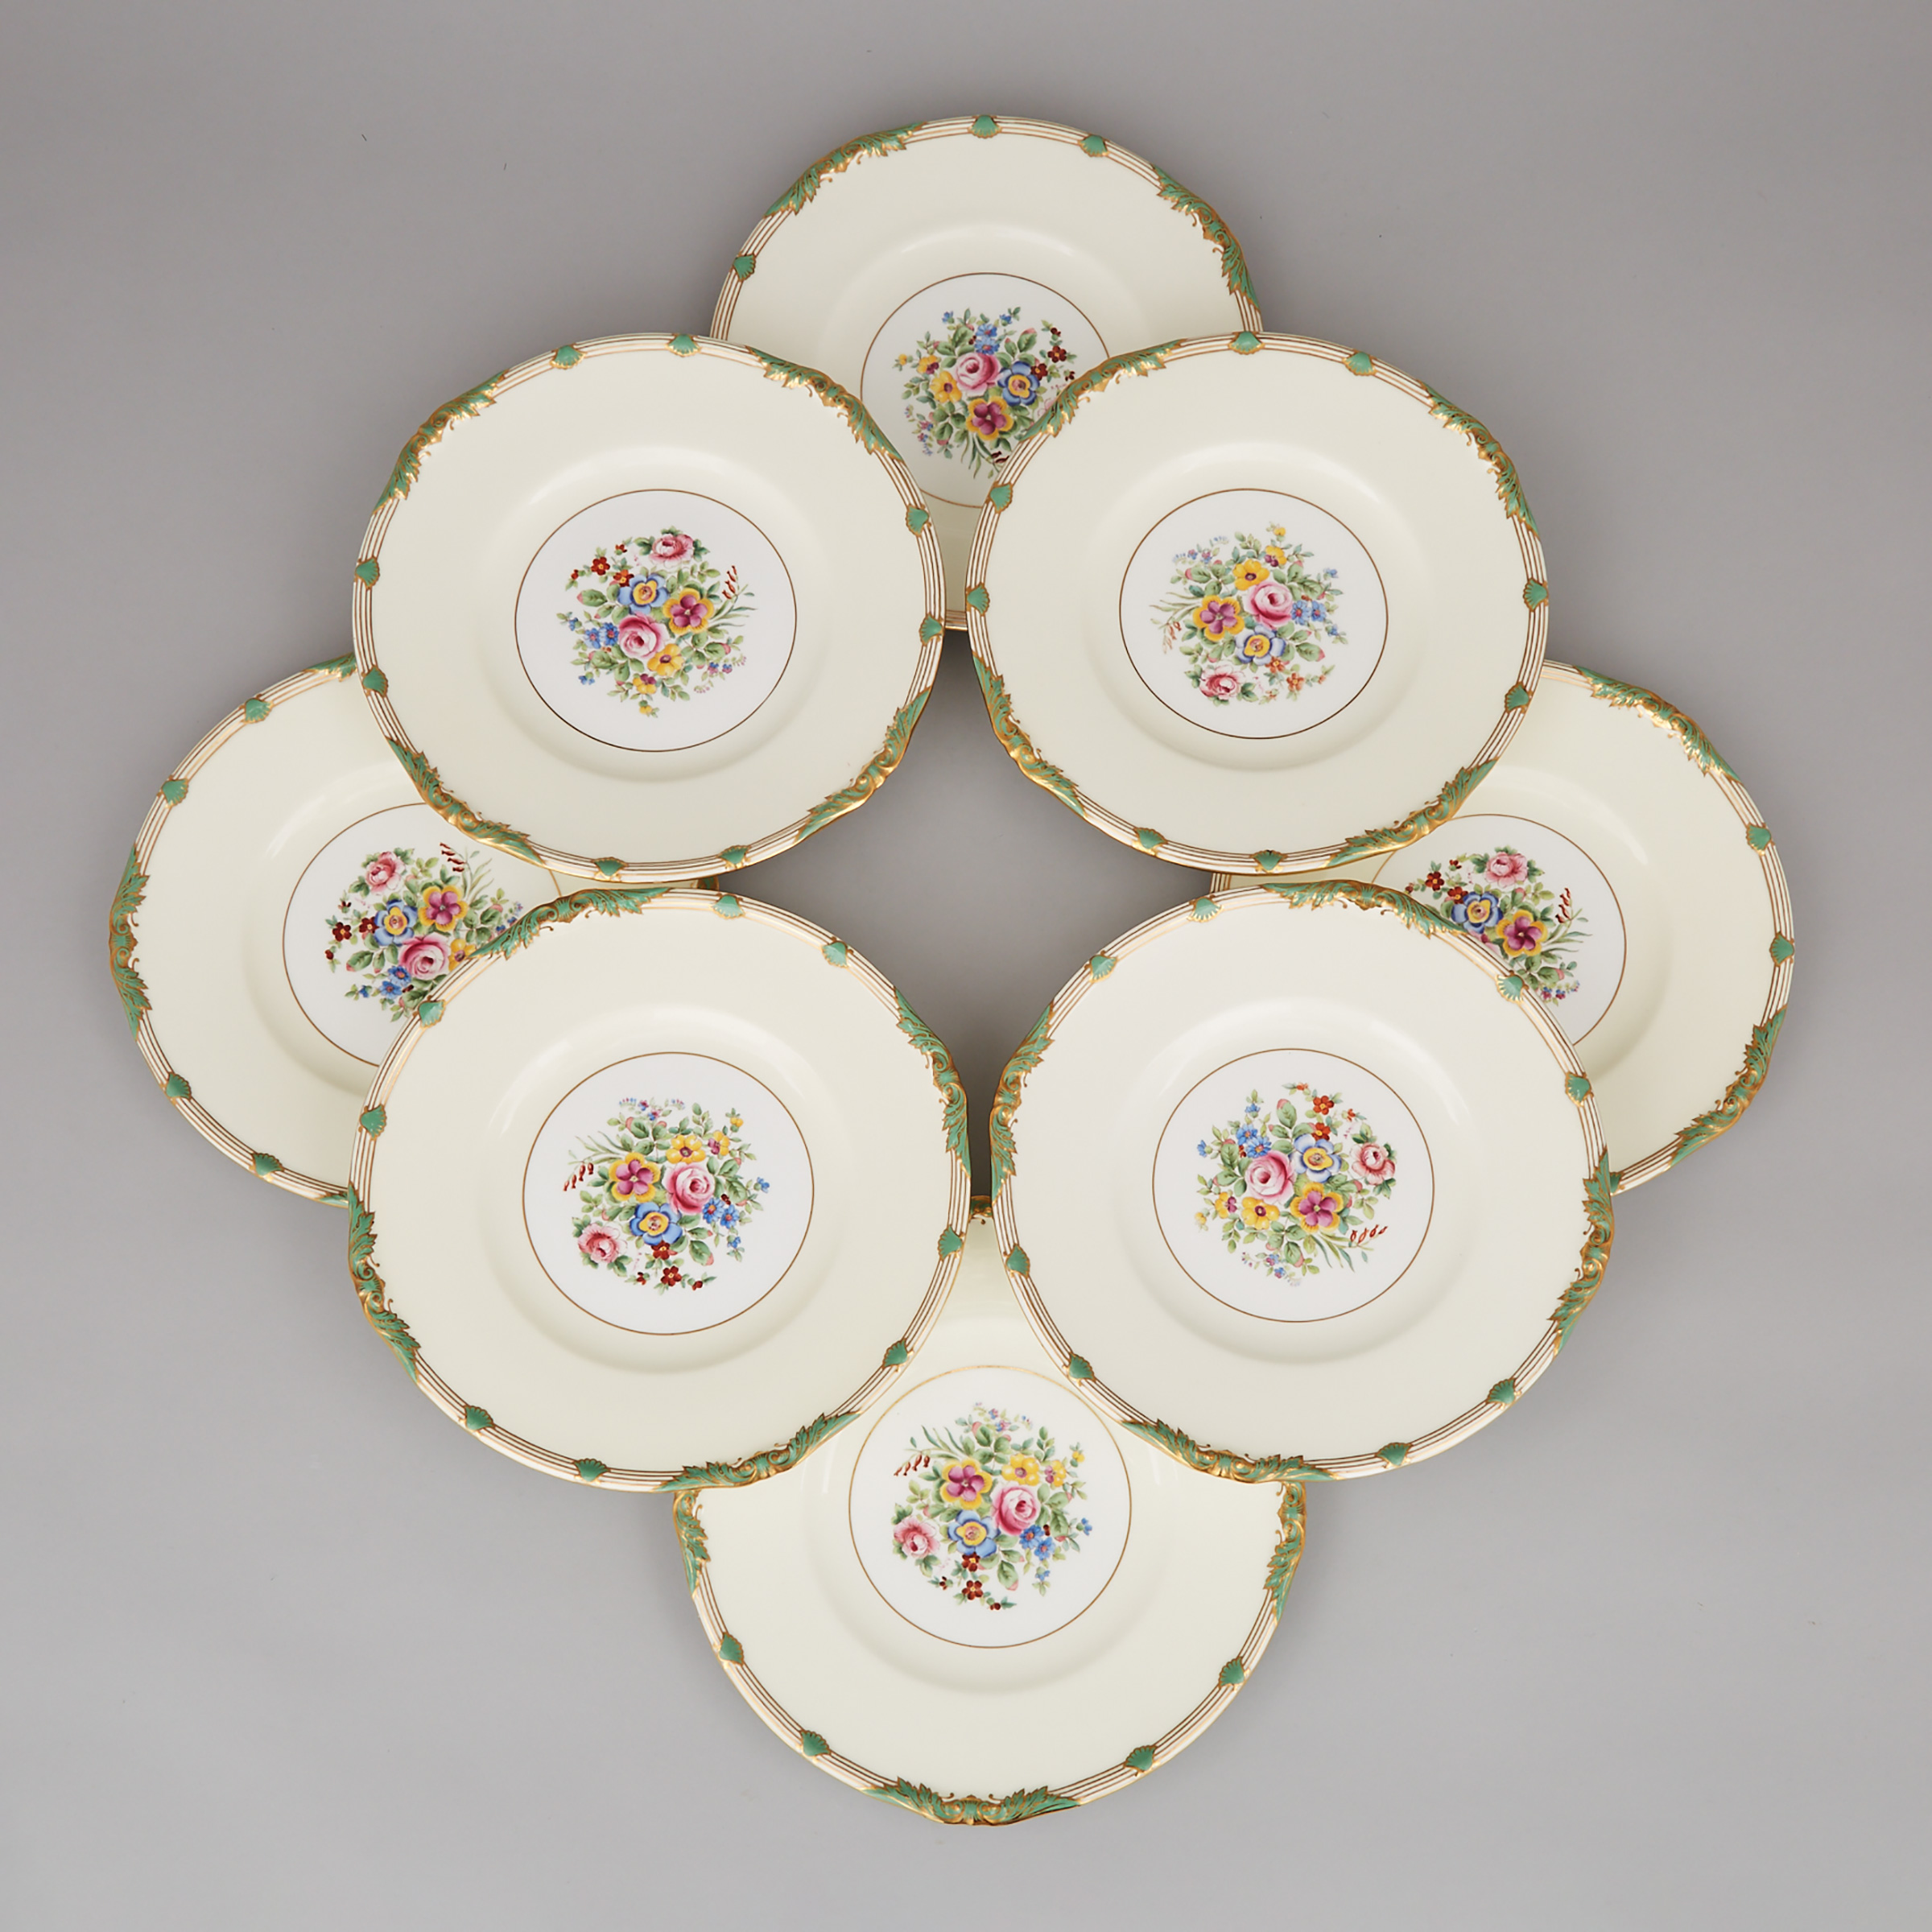 Set of Eight Minton Service Plates, 20th century